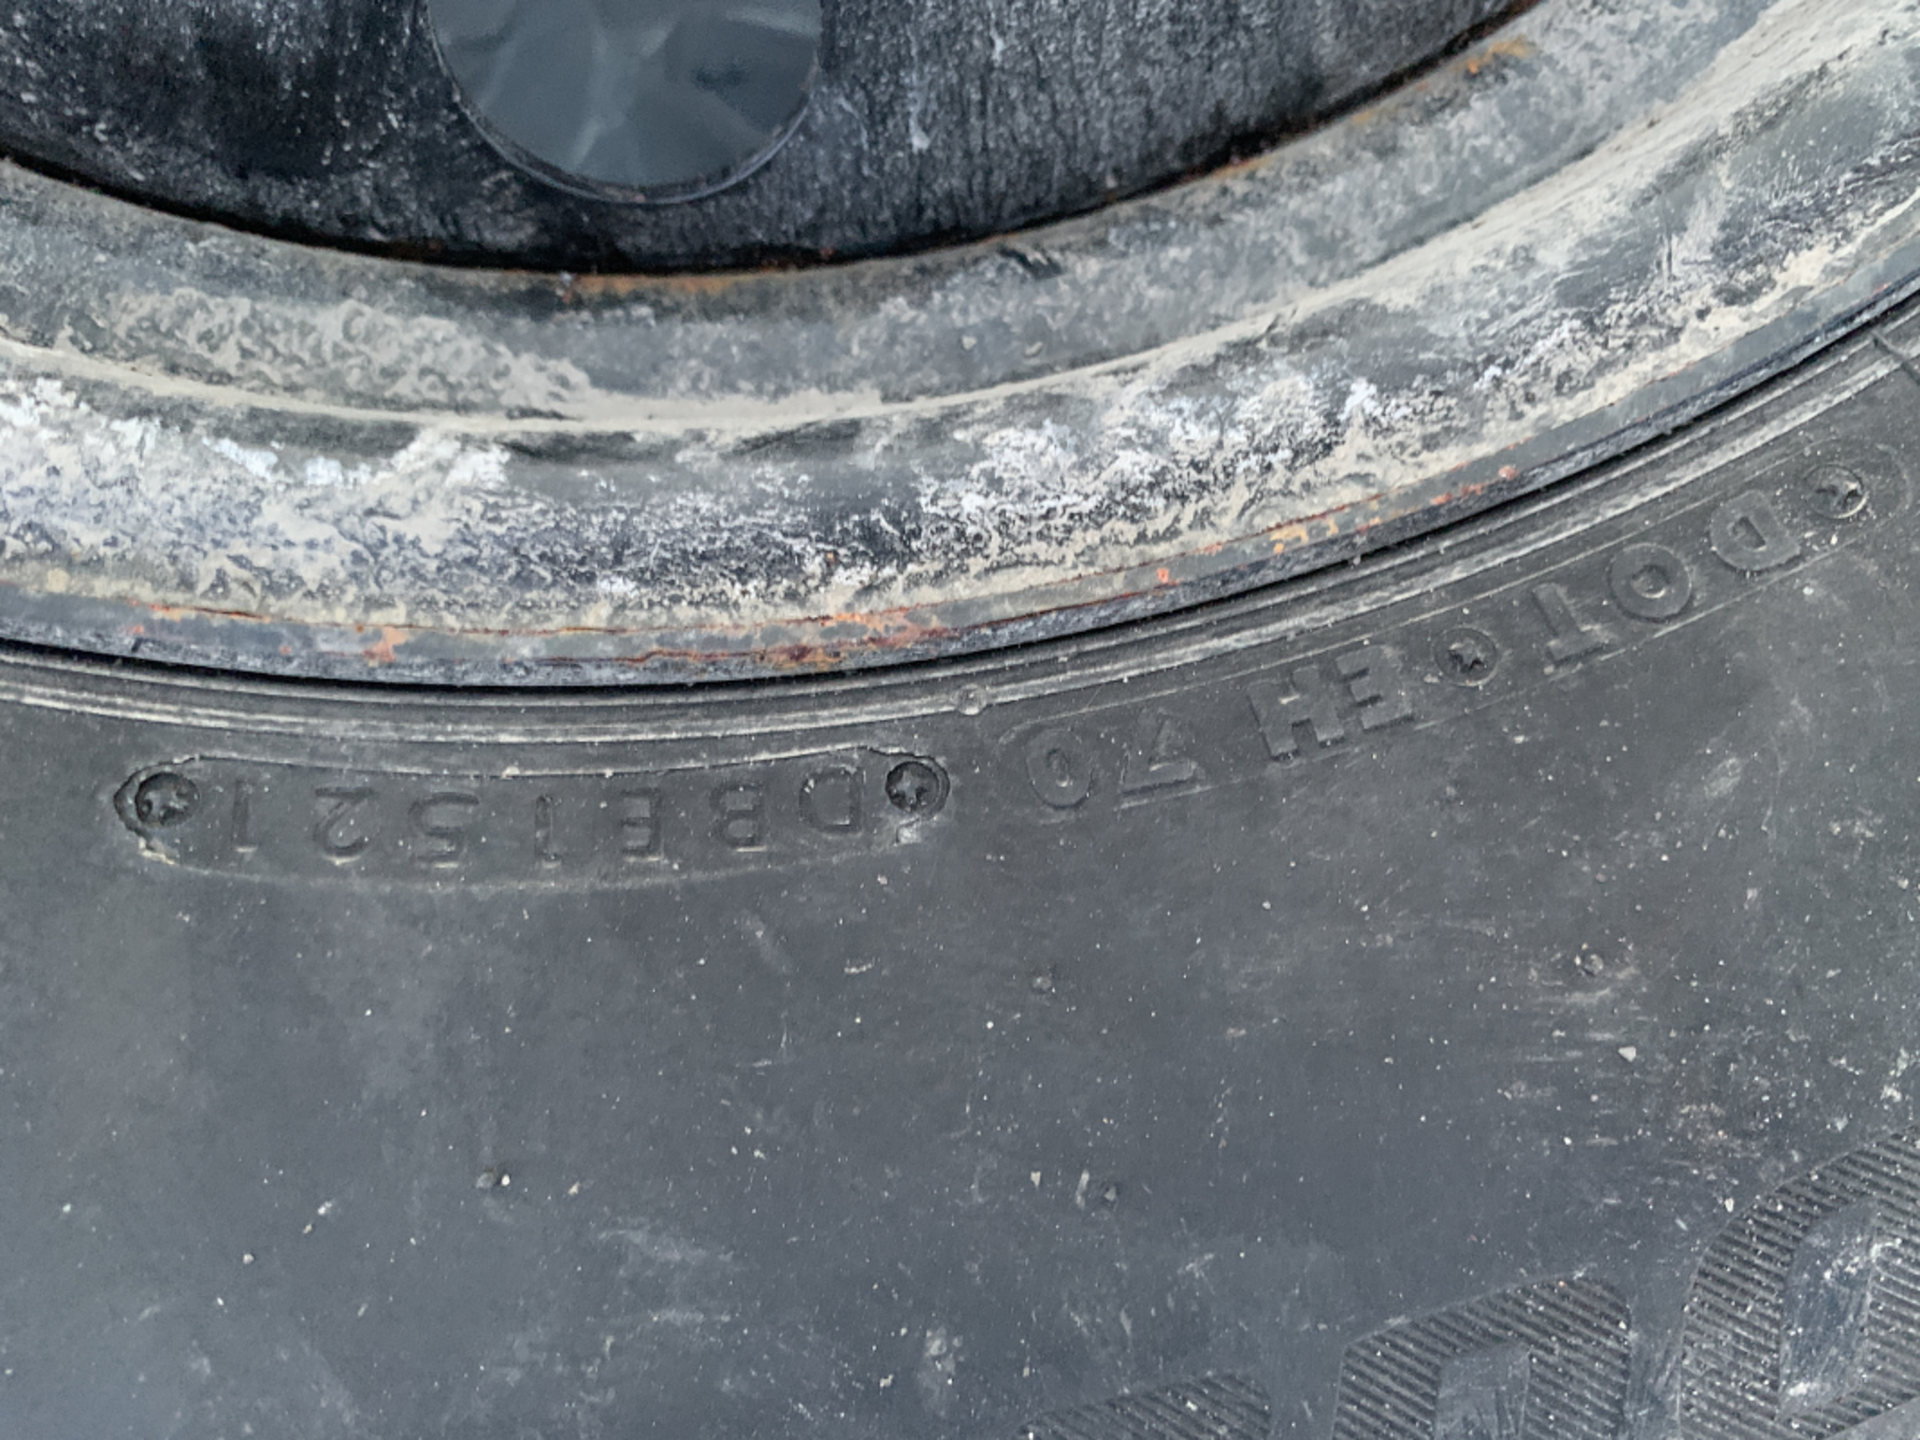 Bridgestone - Blizzak DM-V2 Winter Tires - Size: 265/70/R17 - Qty: 4 - Image 4 of 4